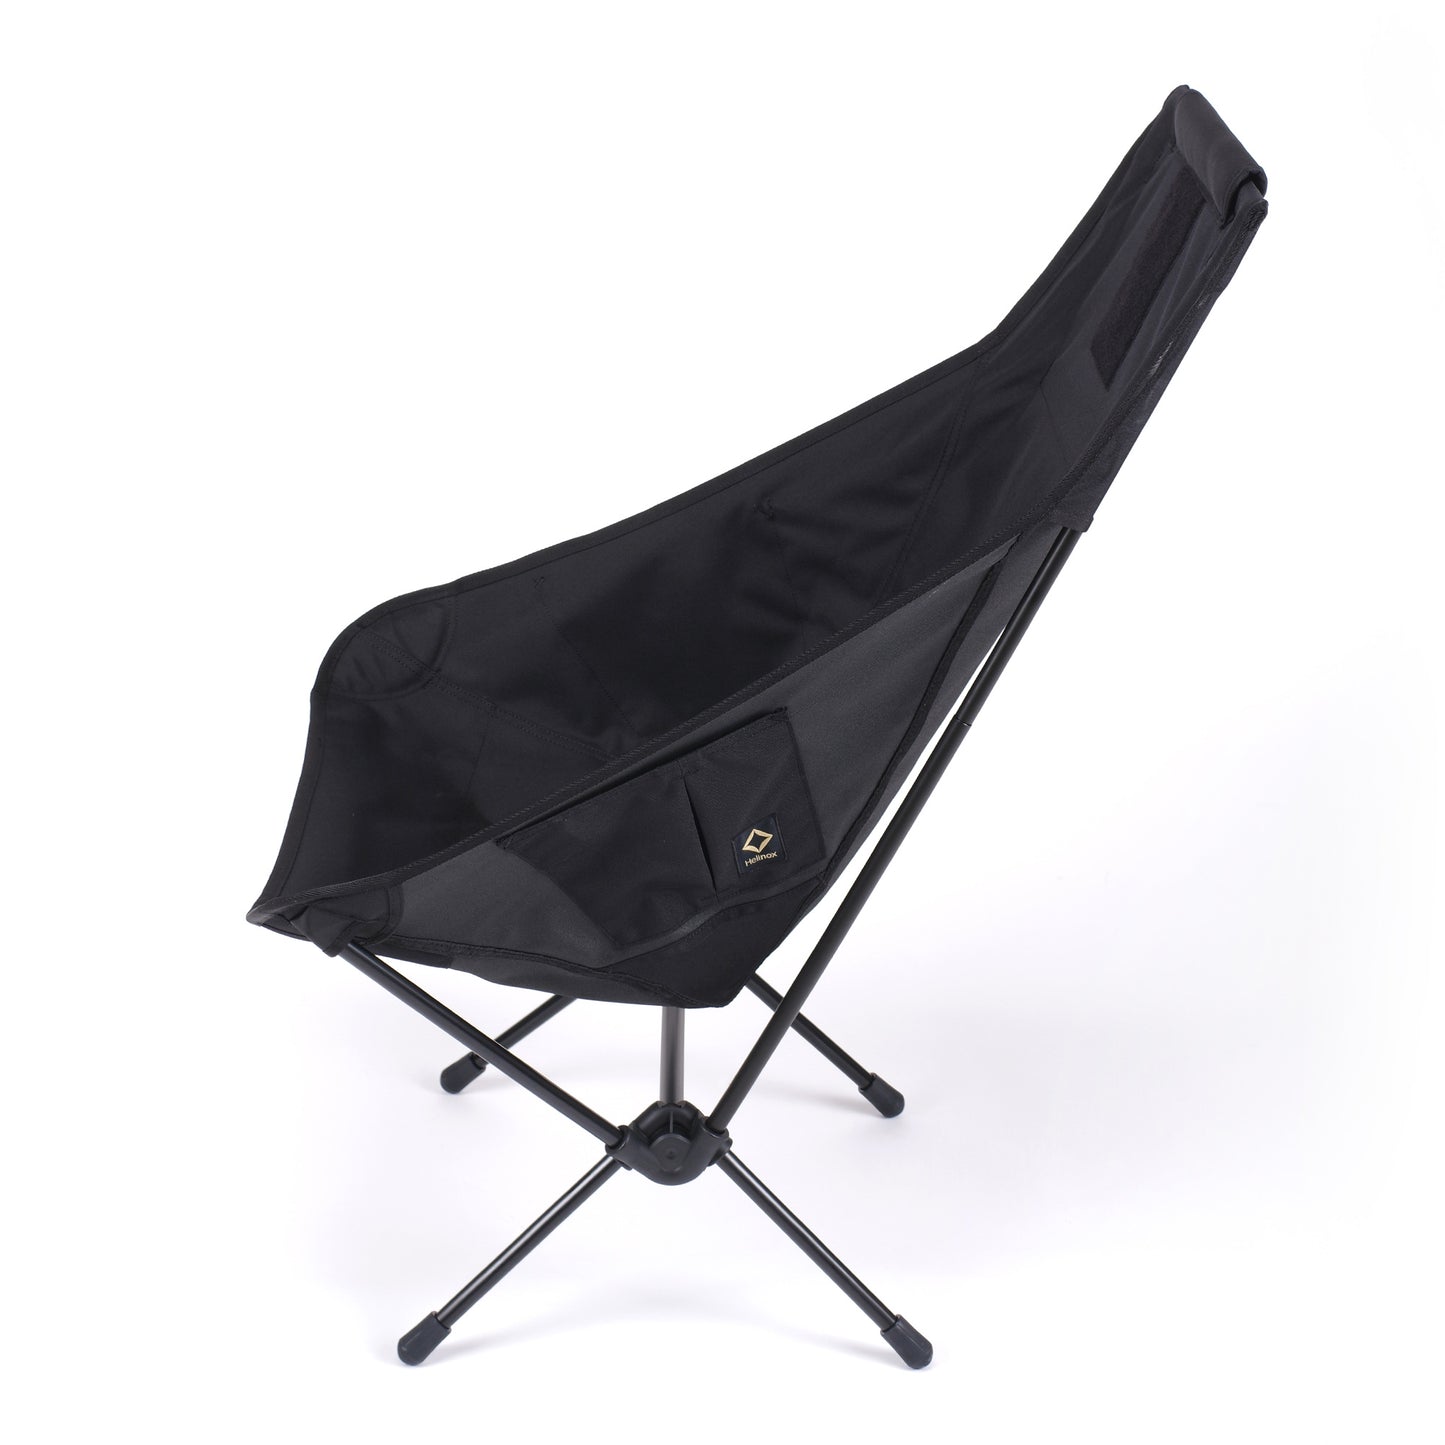 Tac. Chair Two - Black